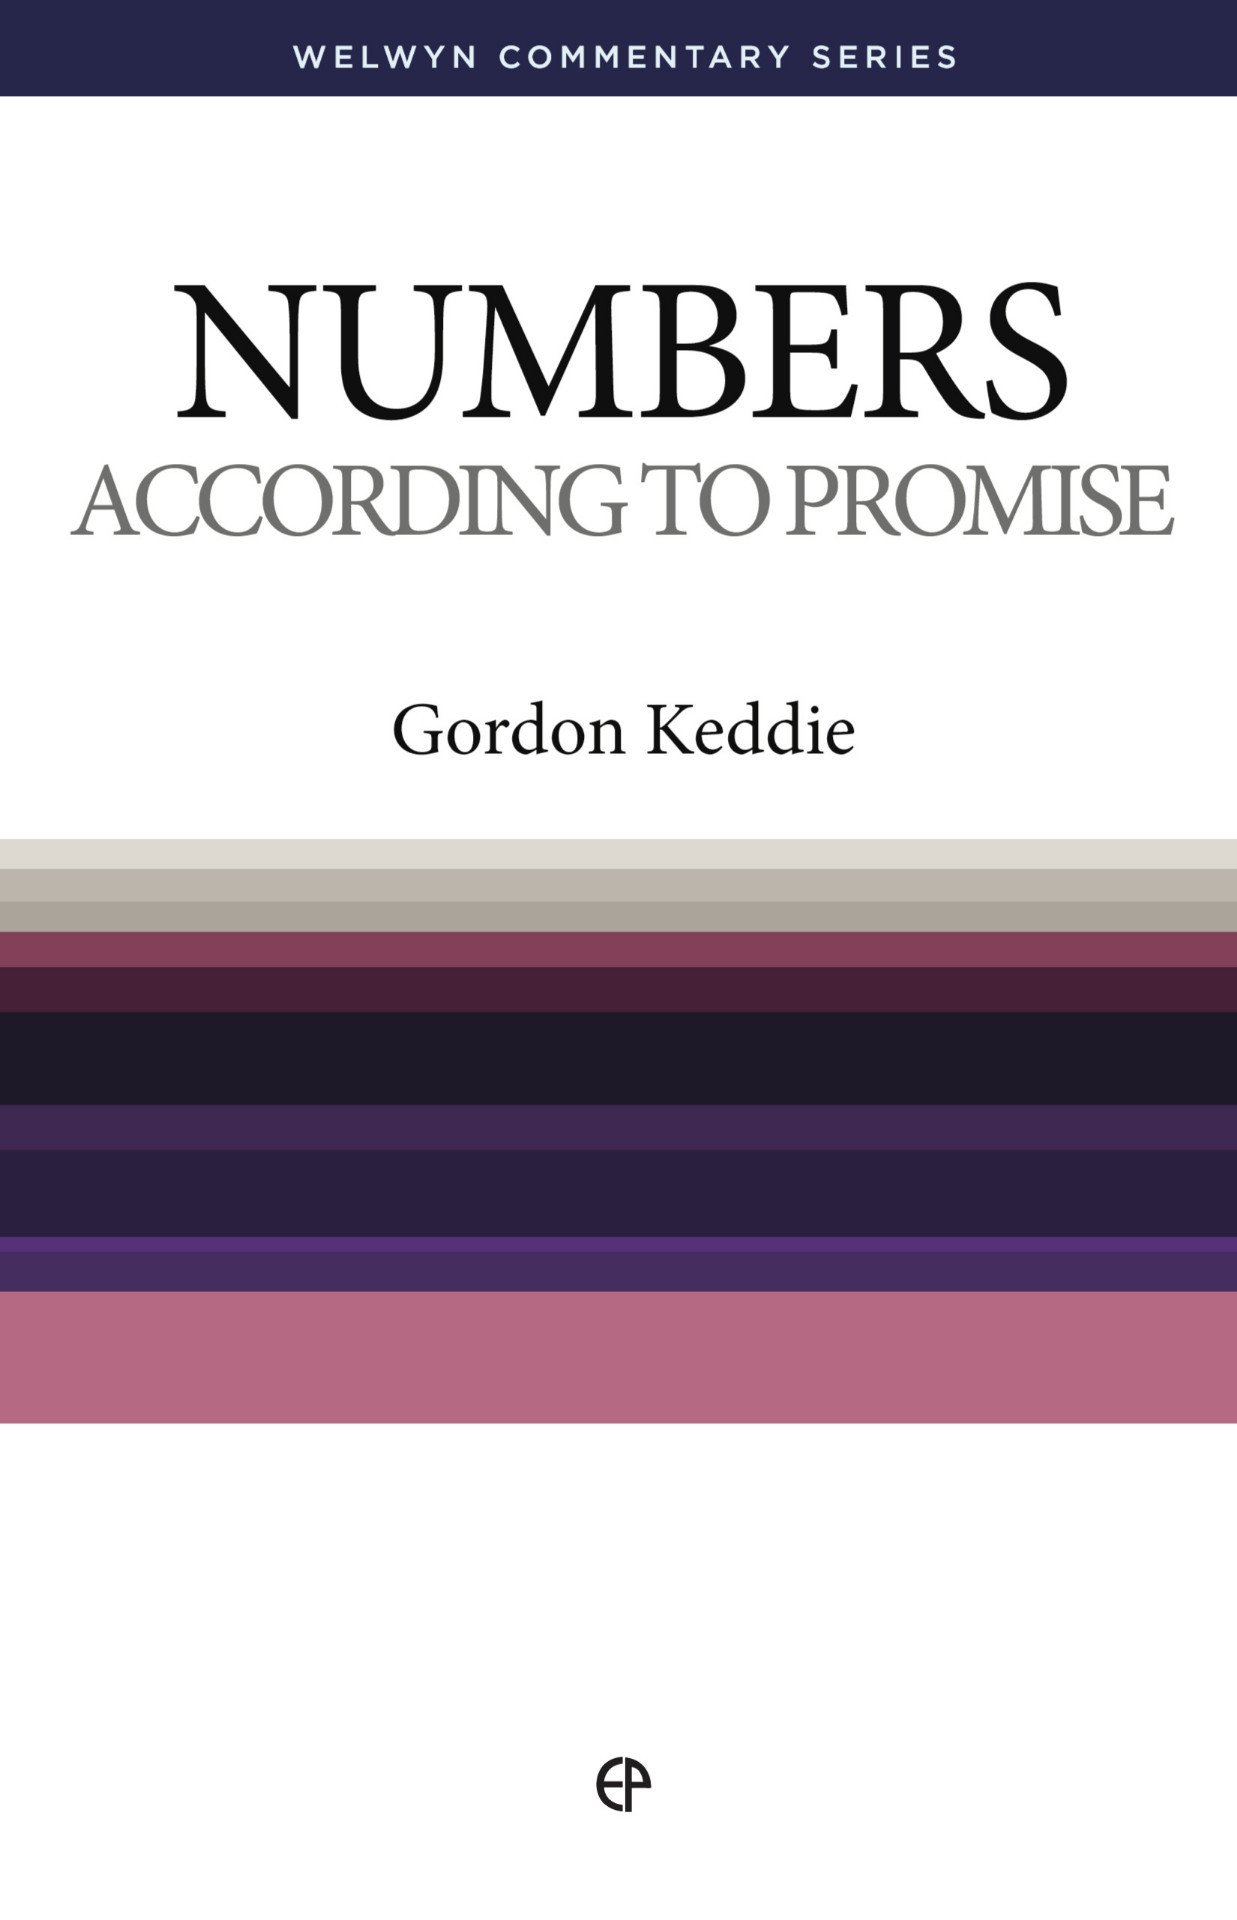 WCS Numbers – According to Progress by Gordon Keddie